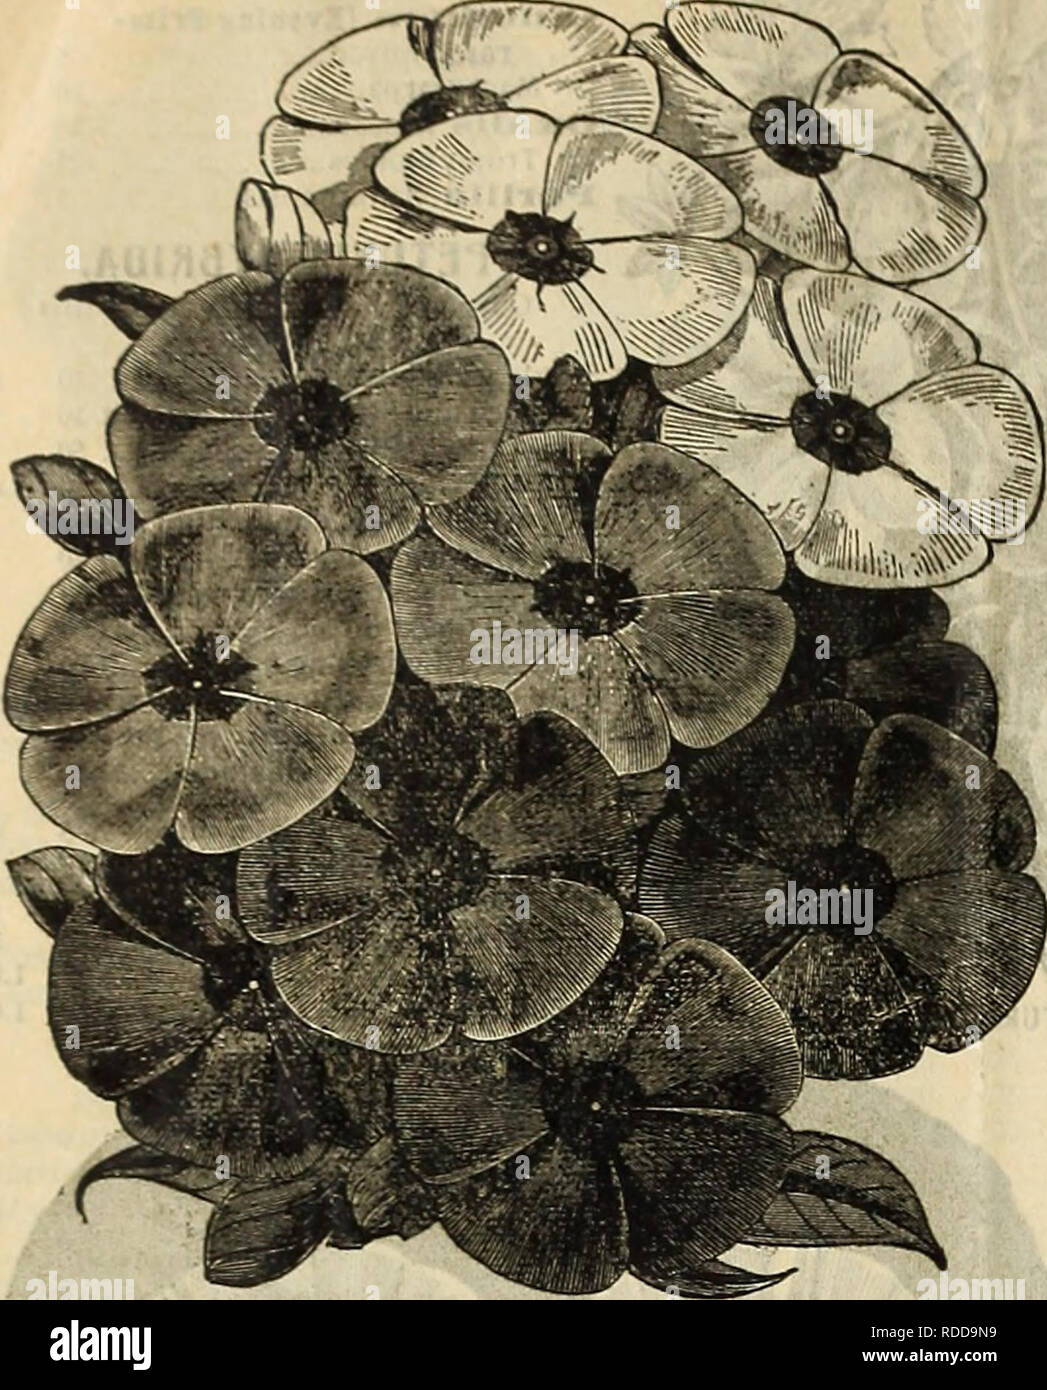 . E. H. Hunt's catalogue. Nurseries (Horticulture) Illinois Catalogs; Bulbs (Plants) Catalogs; Flowers Catalogs; Gardening Equipment and supplies Catalogs. E*. H. HUNT. CHICAGO. CATALOGUE FOR FLORISTS.. RICINUS (CASTOR OIL PLANT.) Per oz. Borboniensis 15 Gibsoni.    15 Cambodgensis. PHLOX DRUMMONDI. Per oz. Africanus 15 Sanguineus 10 60 Mixed Ib., 75c. 10 PHLOX DRUMMONDI. Trade Pkt. Oz. White. Scarlet, Pink, each io 60 Mixed 10 40 Atropurpurea, blood red 10 60 Star of Quedlinburg 10 GRAND1FL0RA; OR, LARGE-FL. VARIETIES. Alba, white; Coccinea, scarlet; Rosea, pink, each 10 1.00 Splcndens, crims Stock Photo